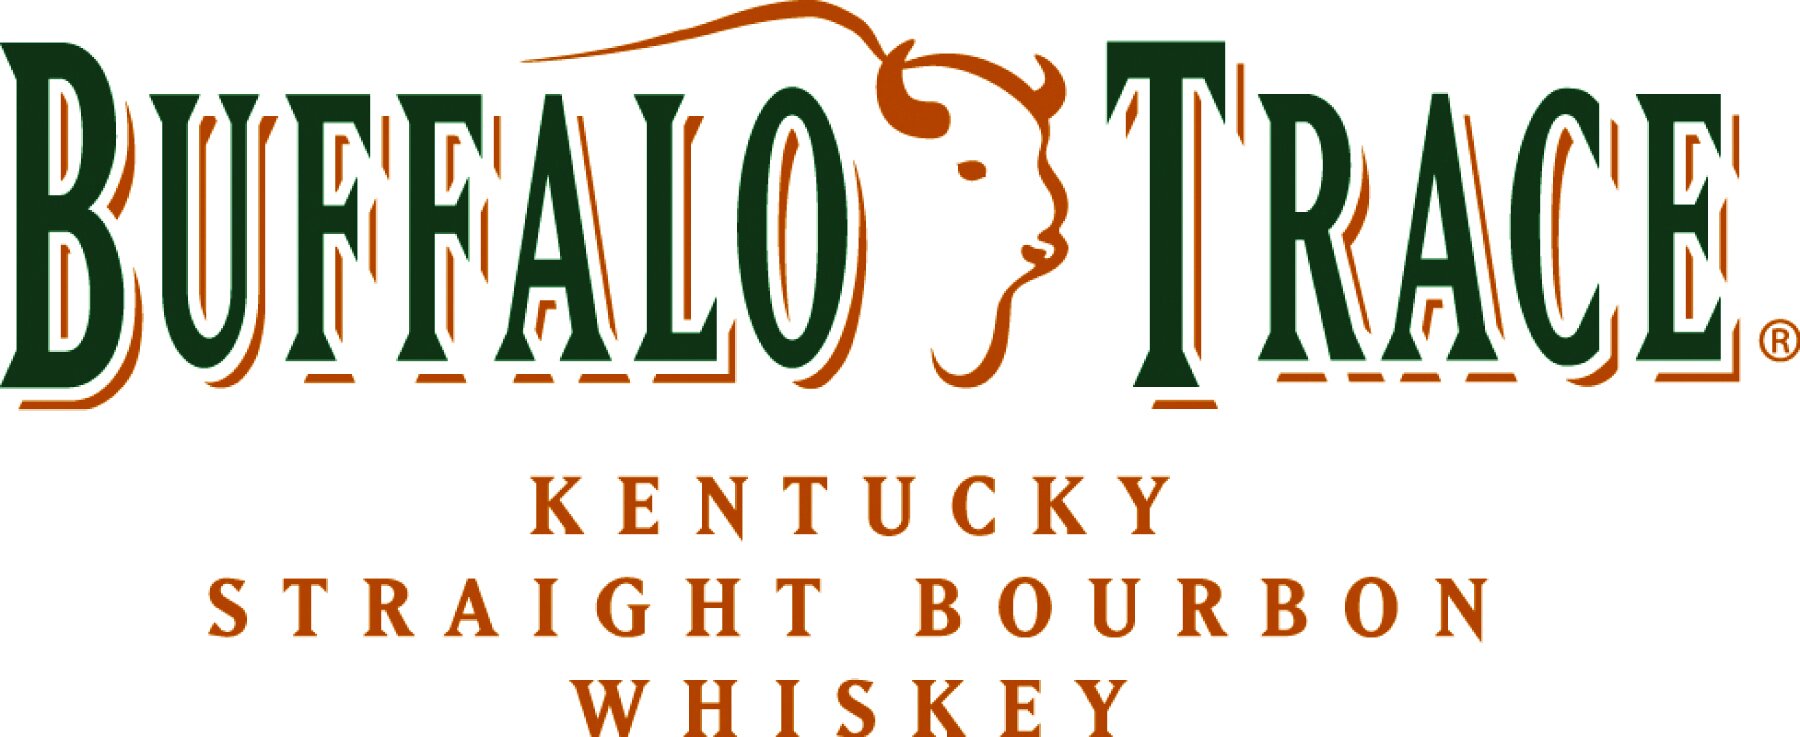 Buffalo-Trace-High-Res-Logo.jpg